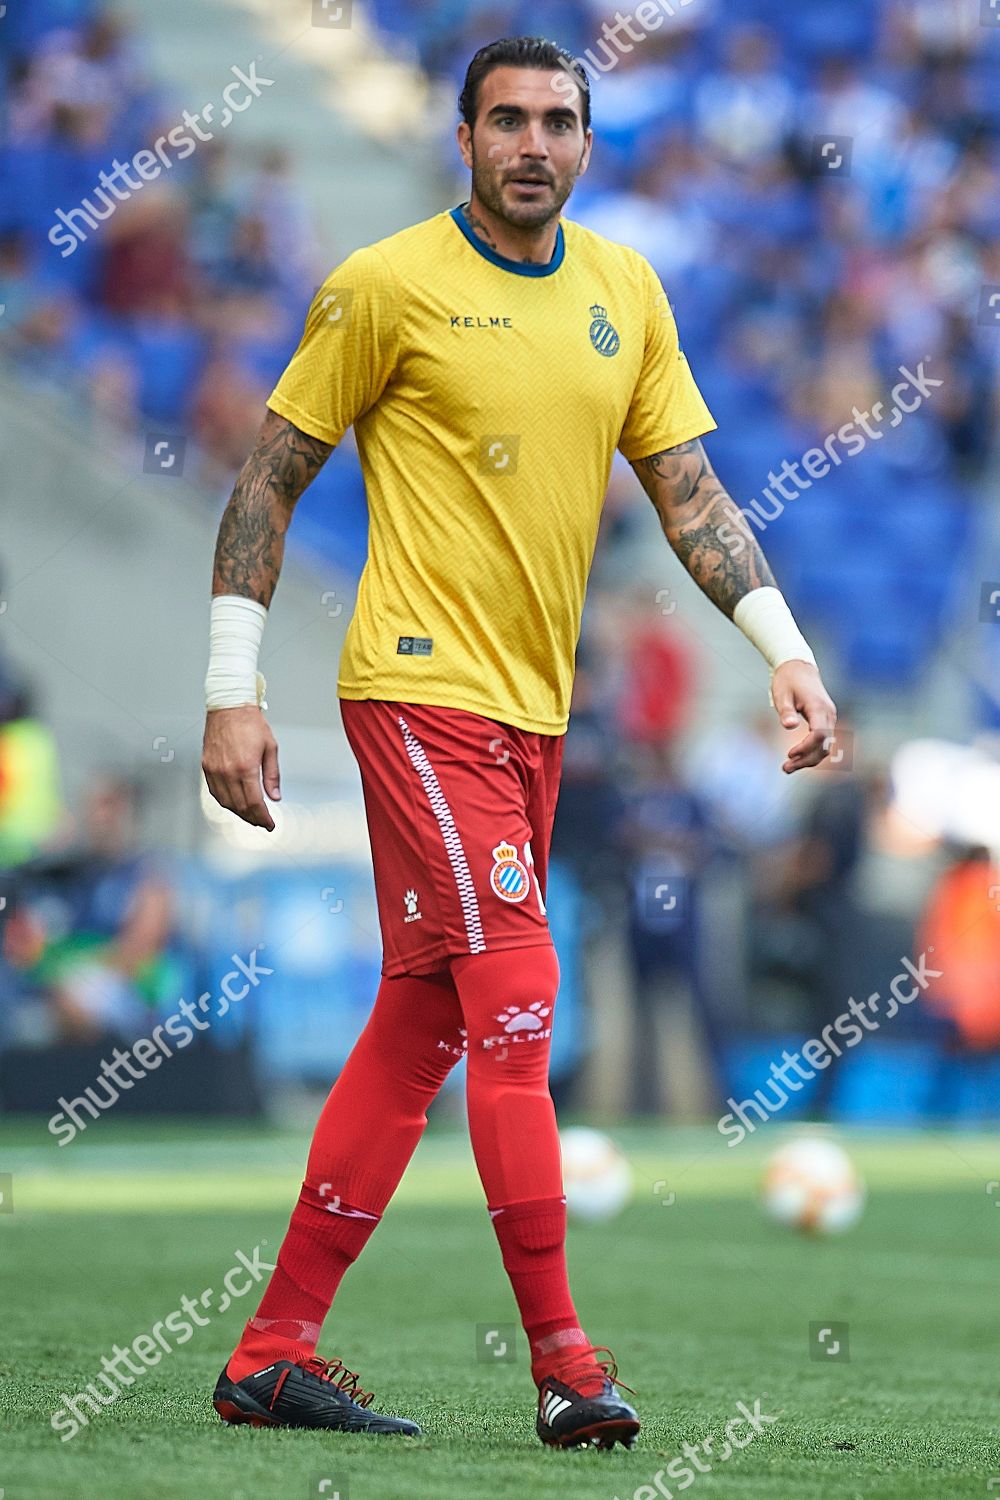 Goalkeeper Jimenez Rcd Espanyol - Foto de stock contenido editorial: imagen de stock | Shutterstock Editorial